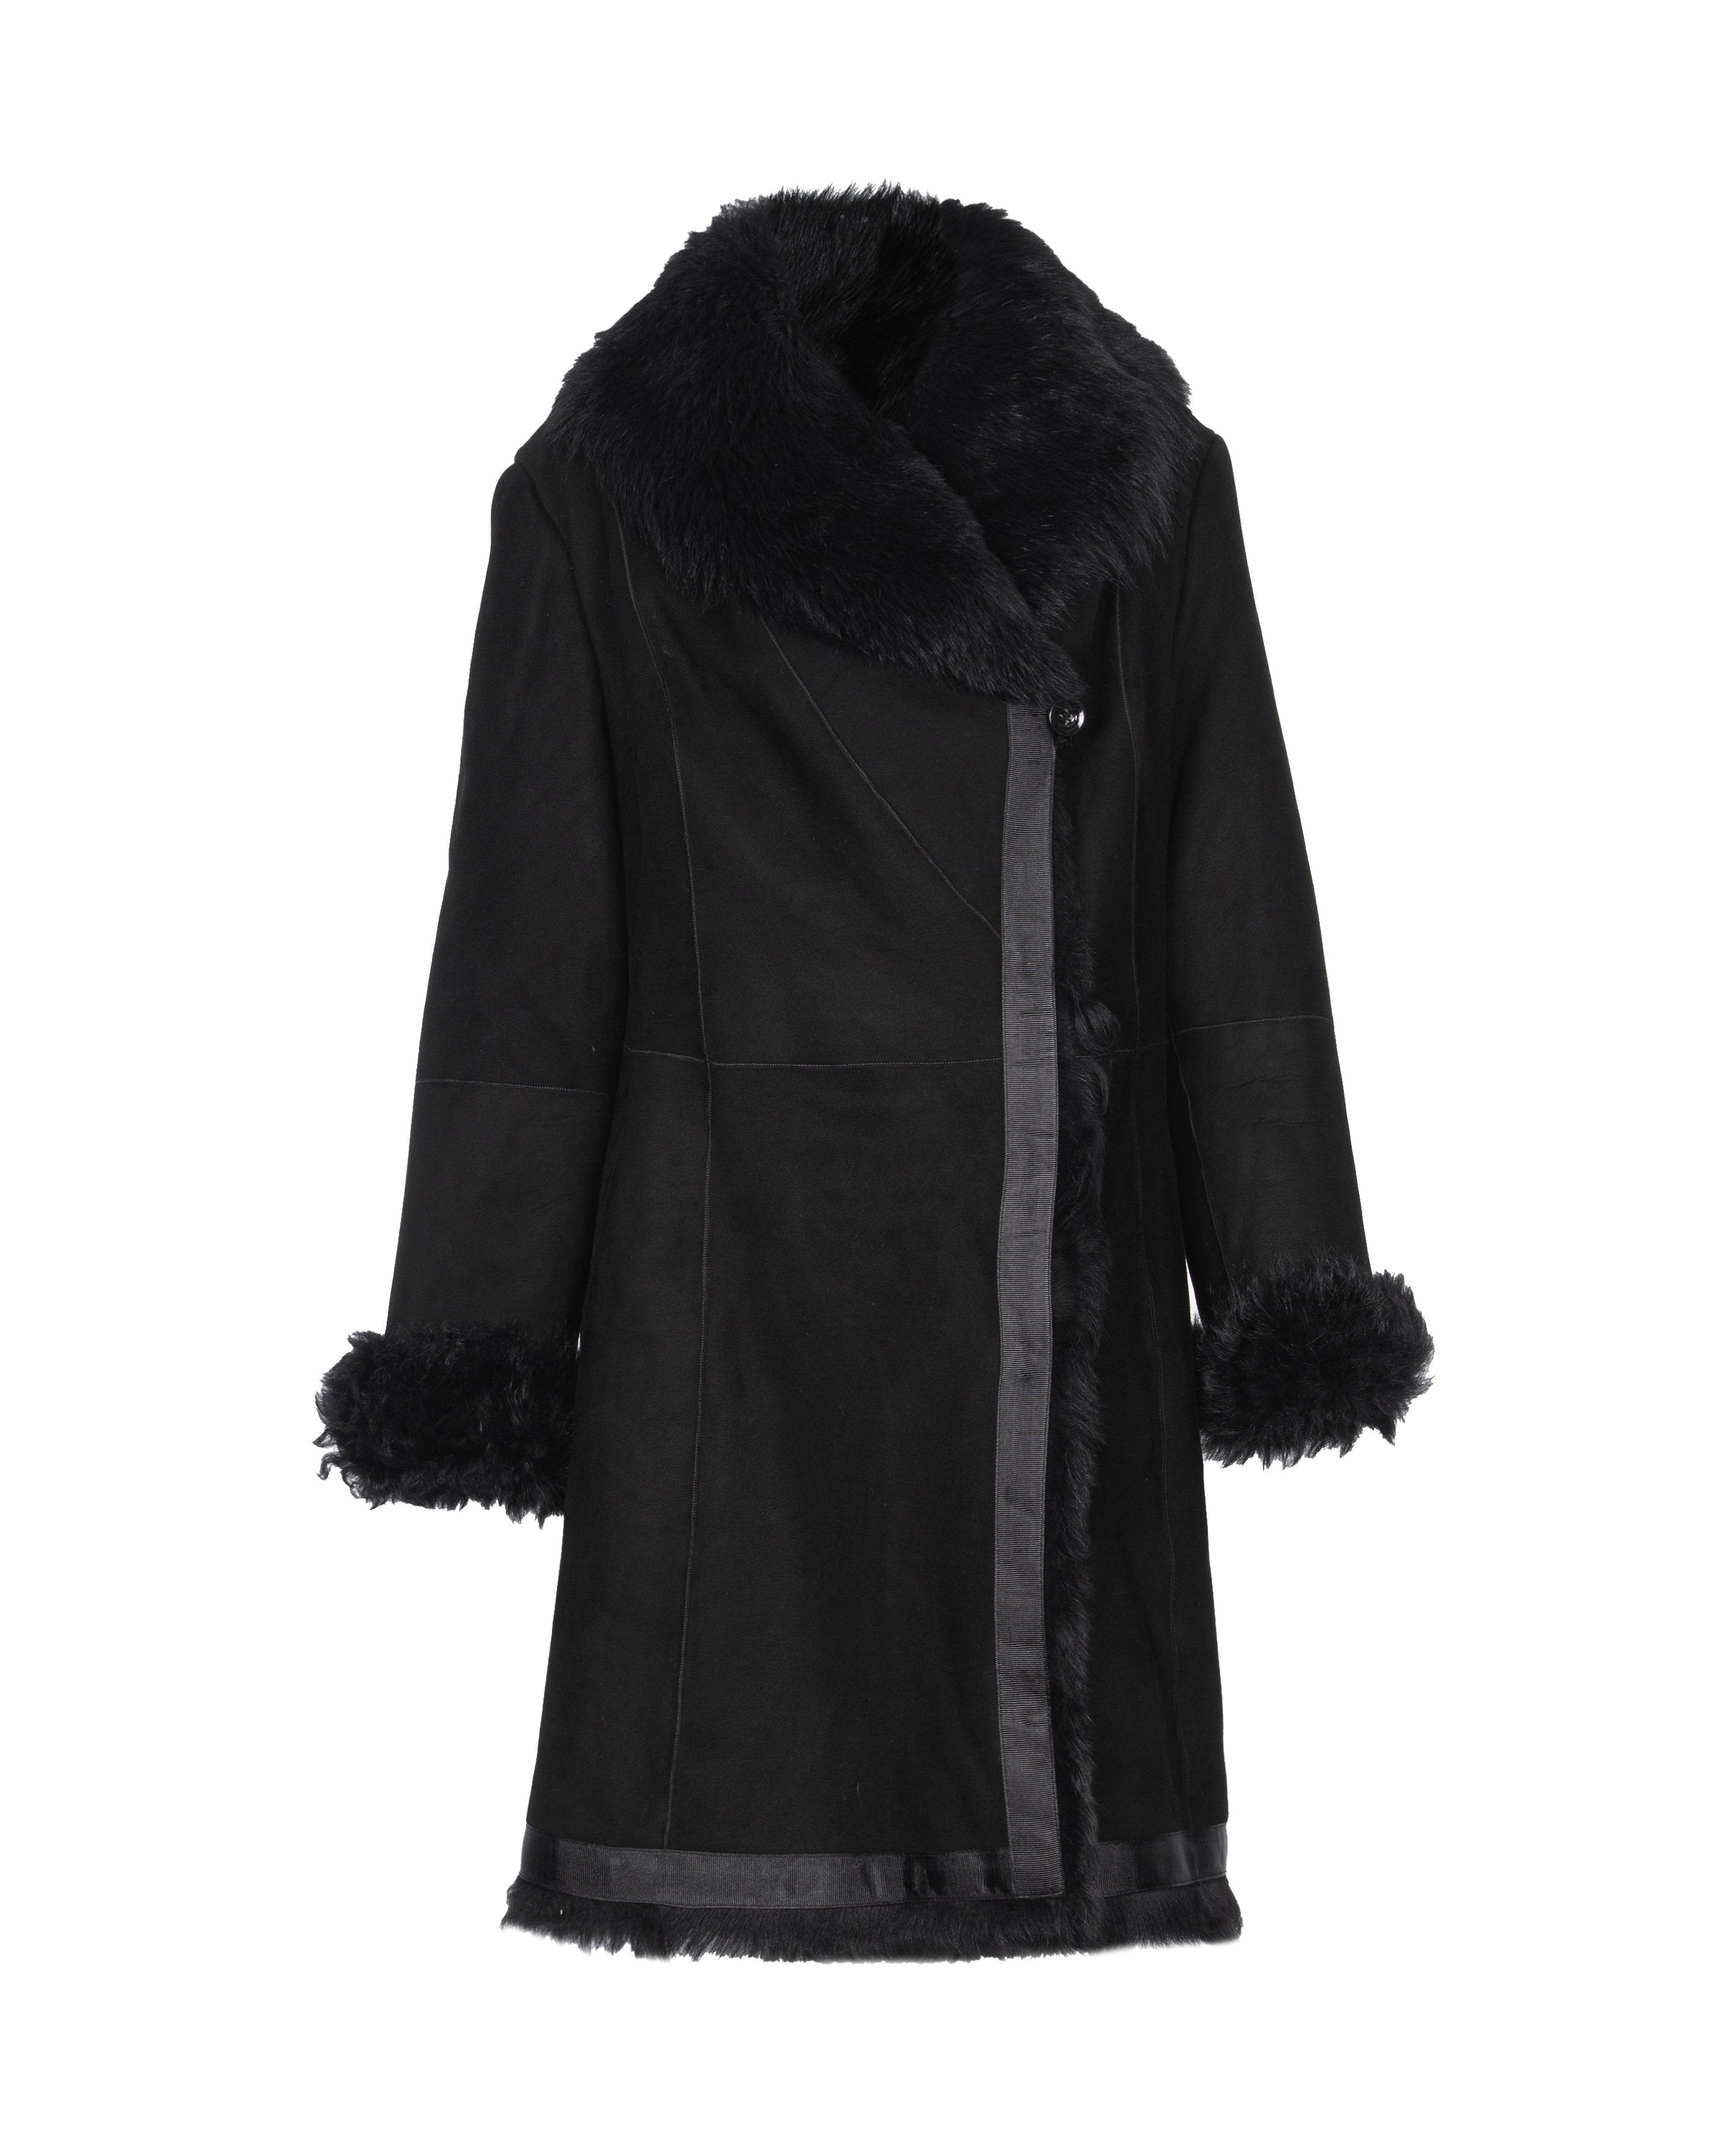 Black Long Leather Coat